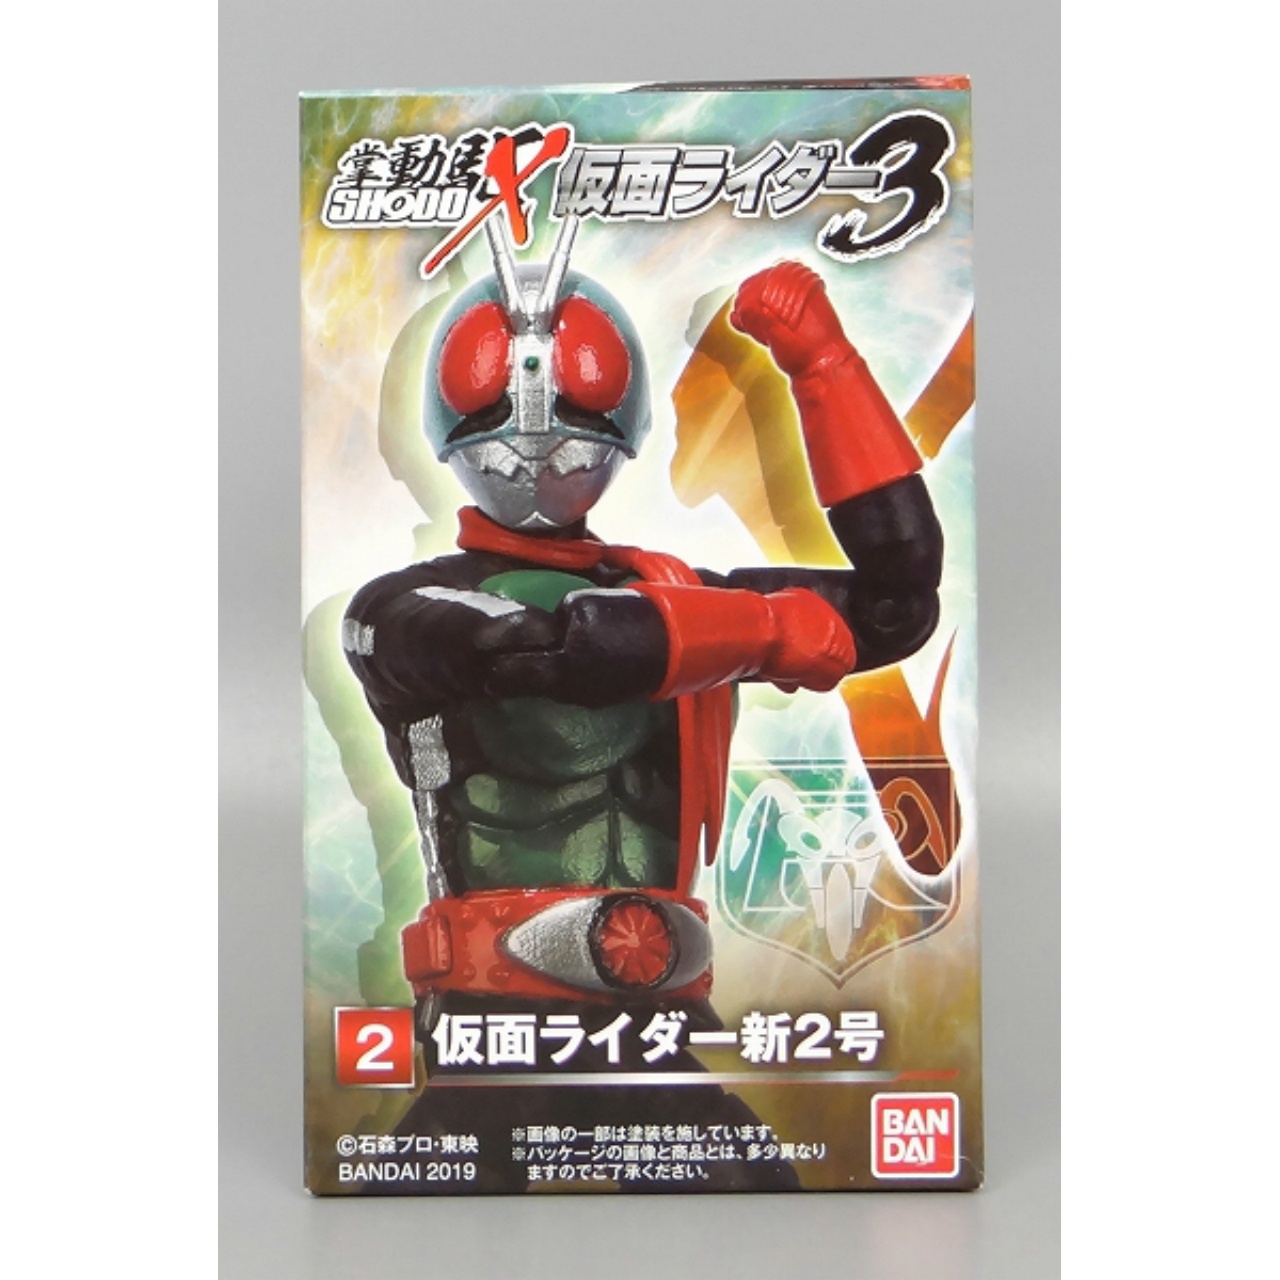 SHODO-X Kamen Rider Vol.3 Kamen Rider New-2